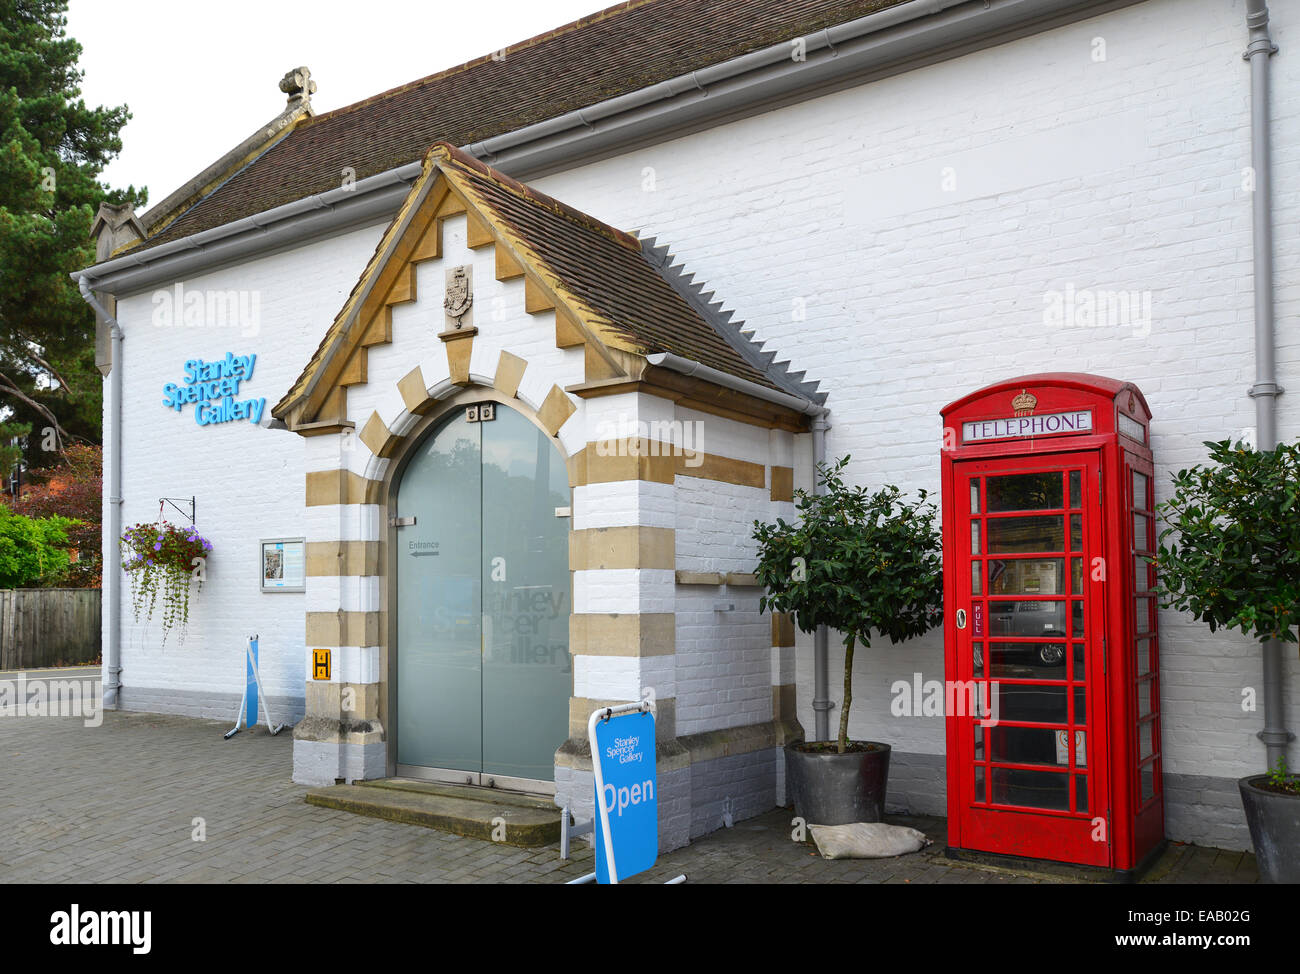 Stanley Spencer Gallery, High Street, Cookham, Berkshire, England, United Kingdom Stock Photo